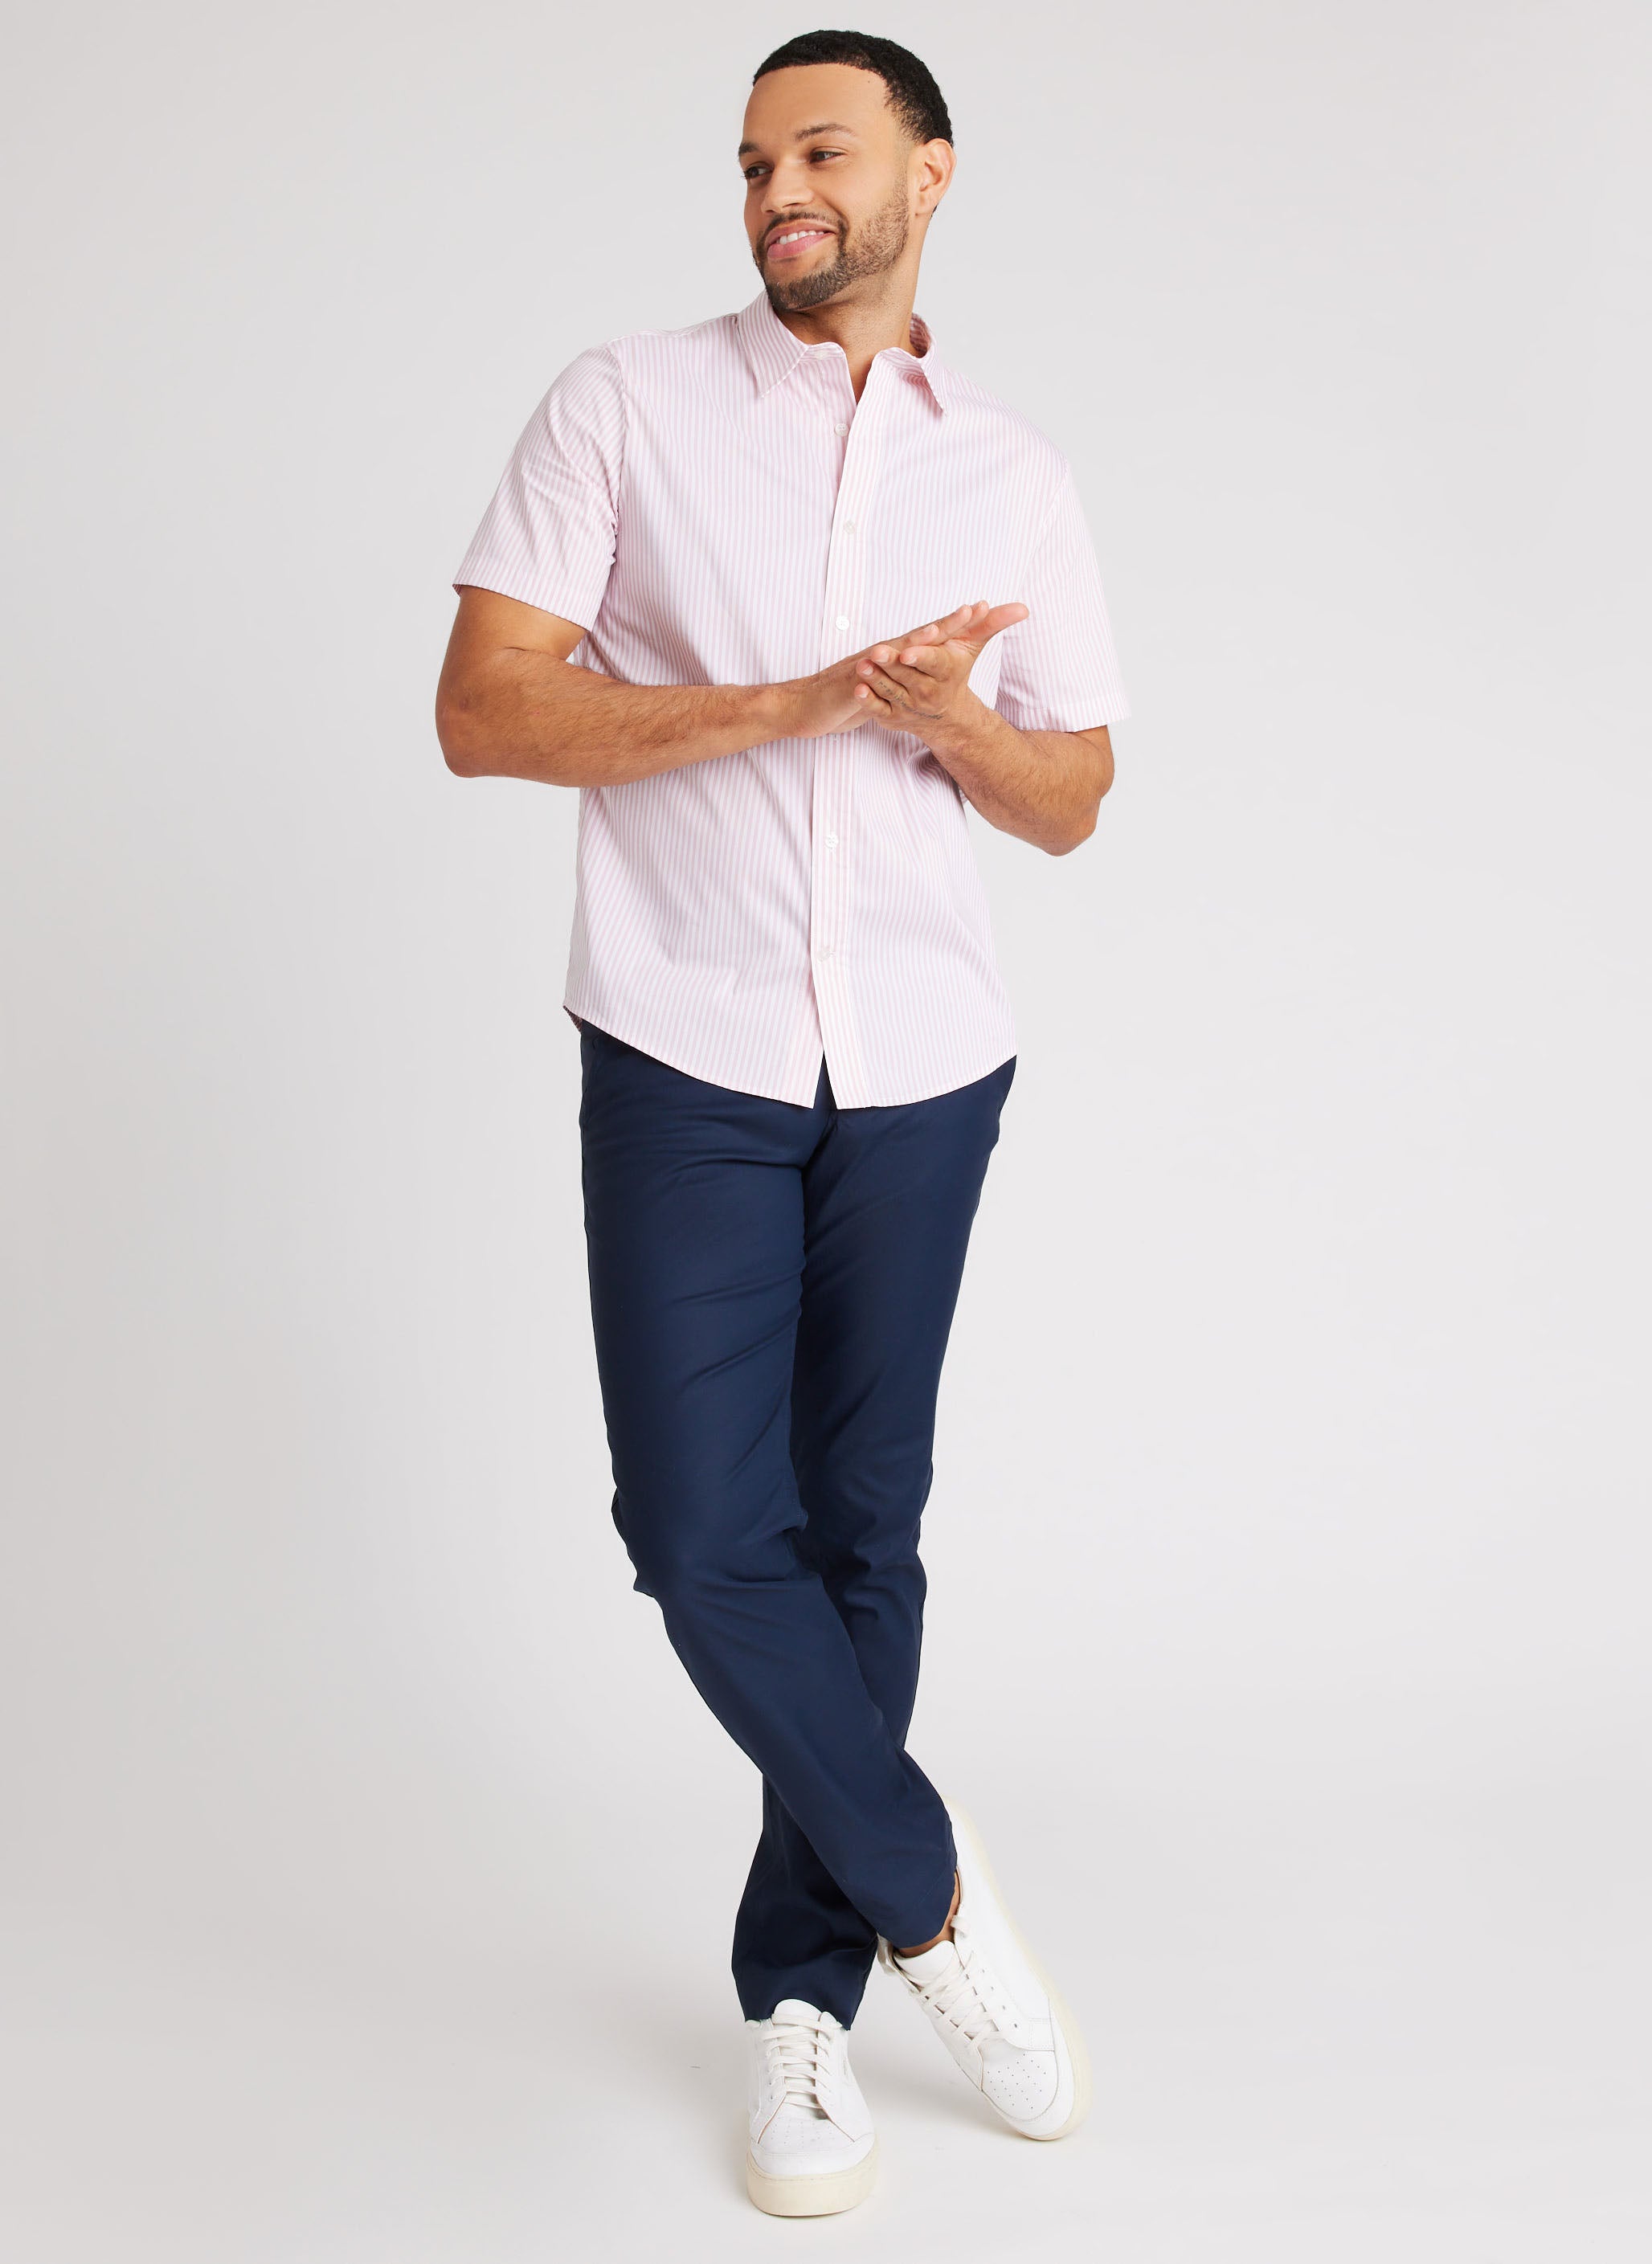 Stay Cool Poplin Short Sleeve Shirt ?? Model:: Emerson | M || Camelia/Bright White Stripe